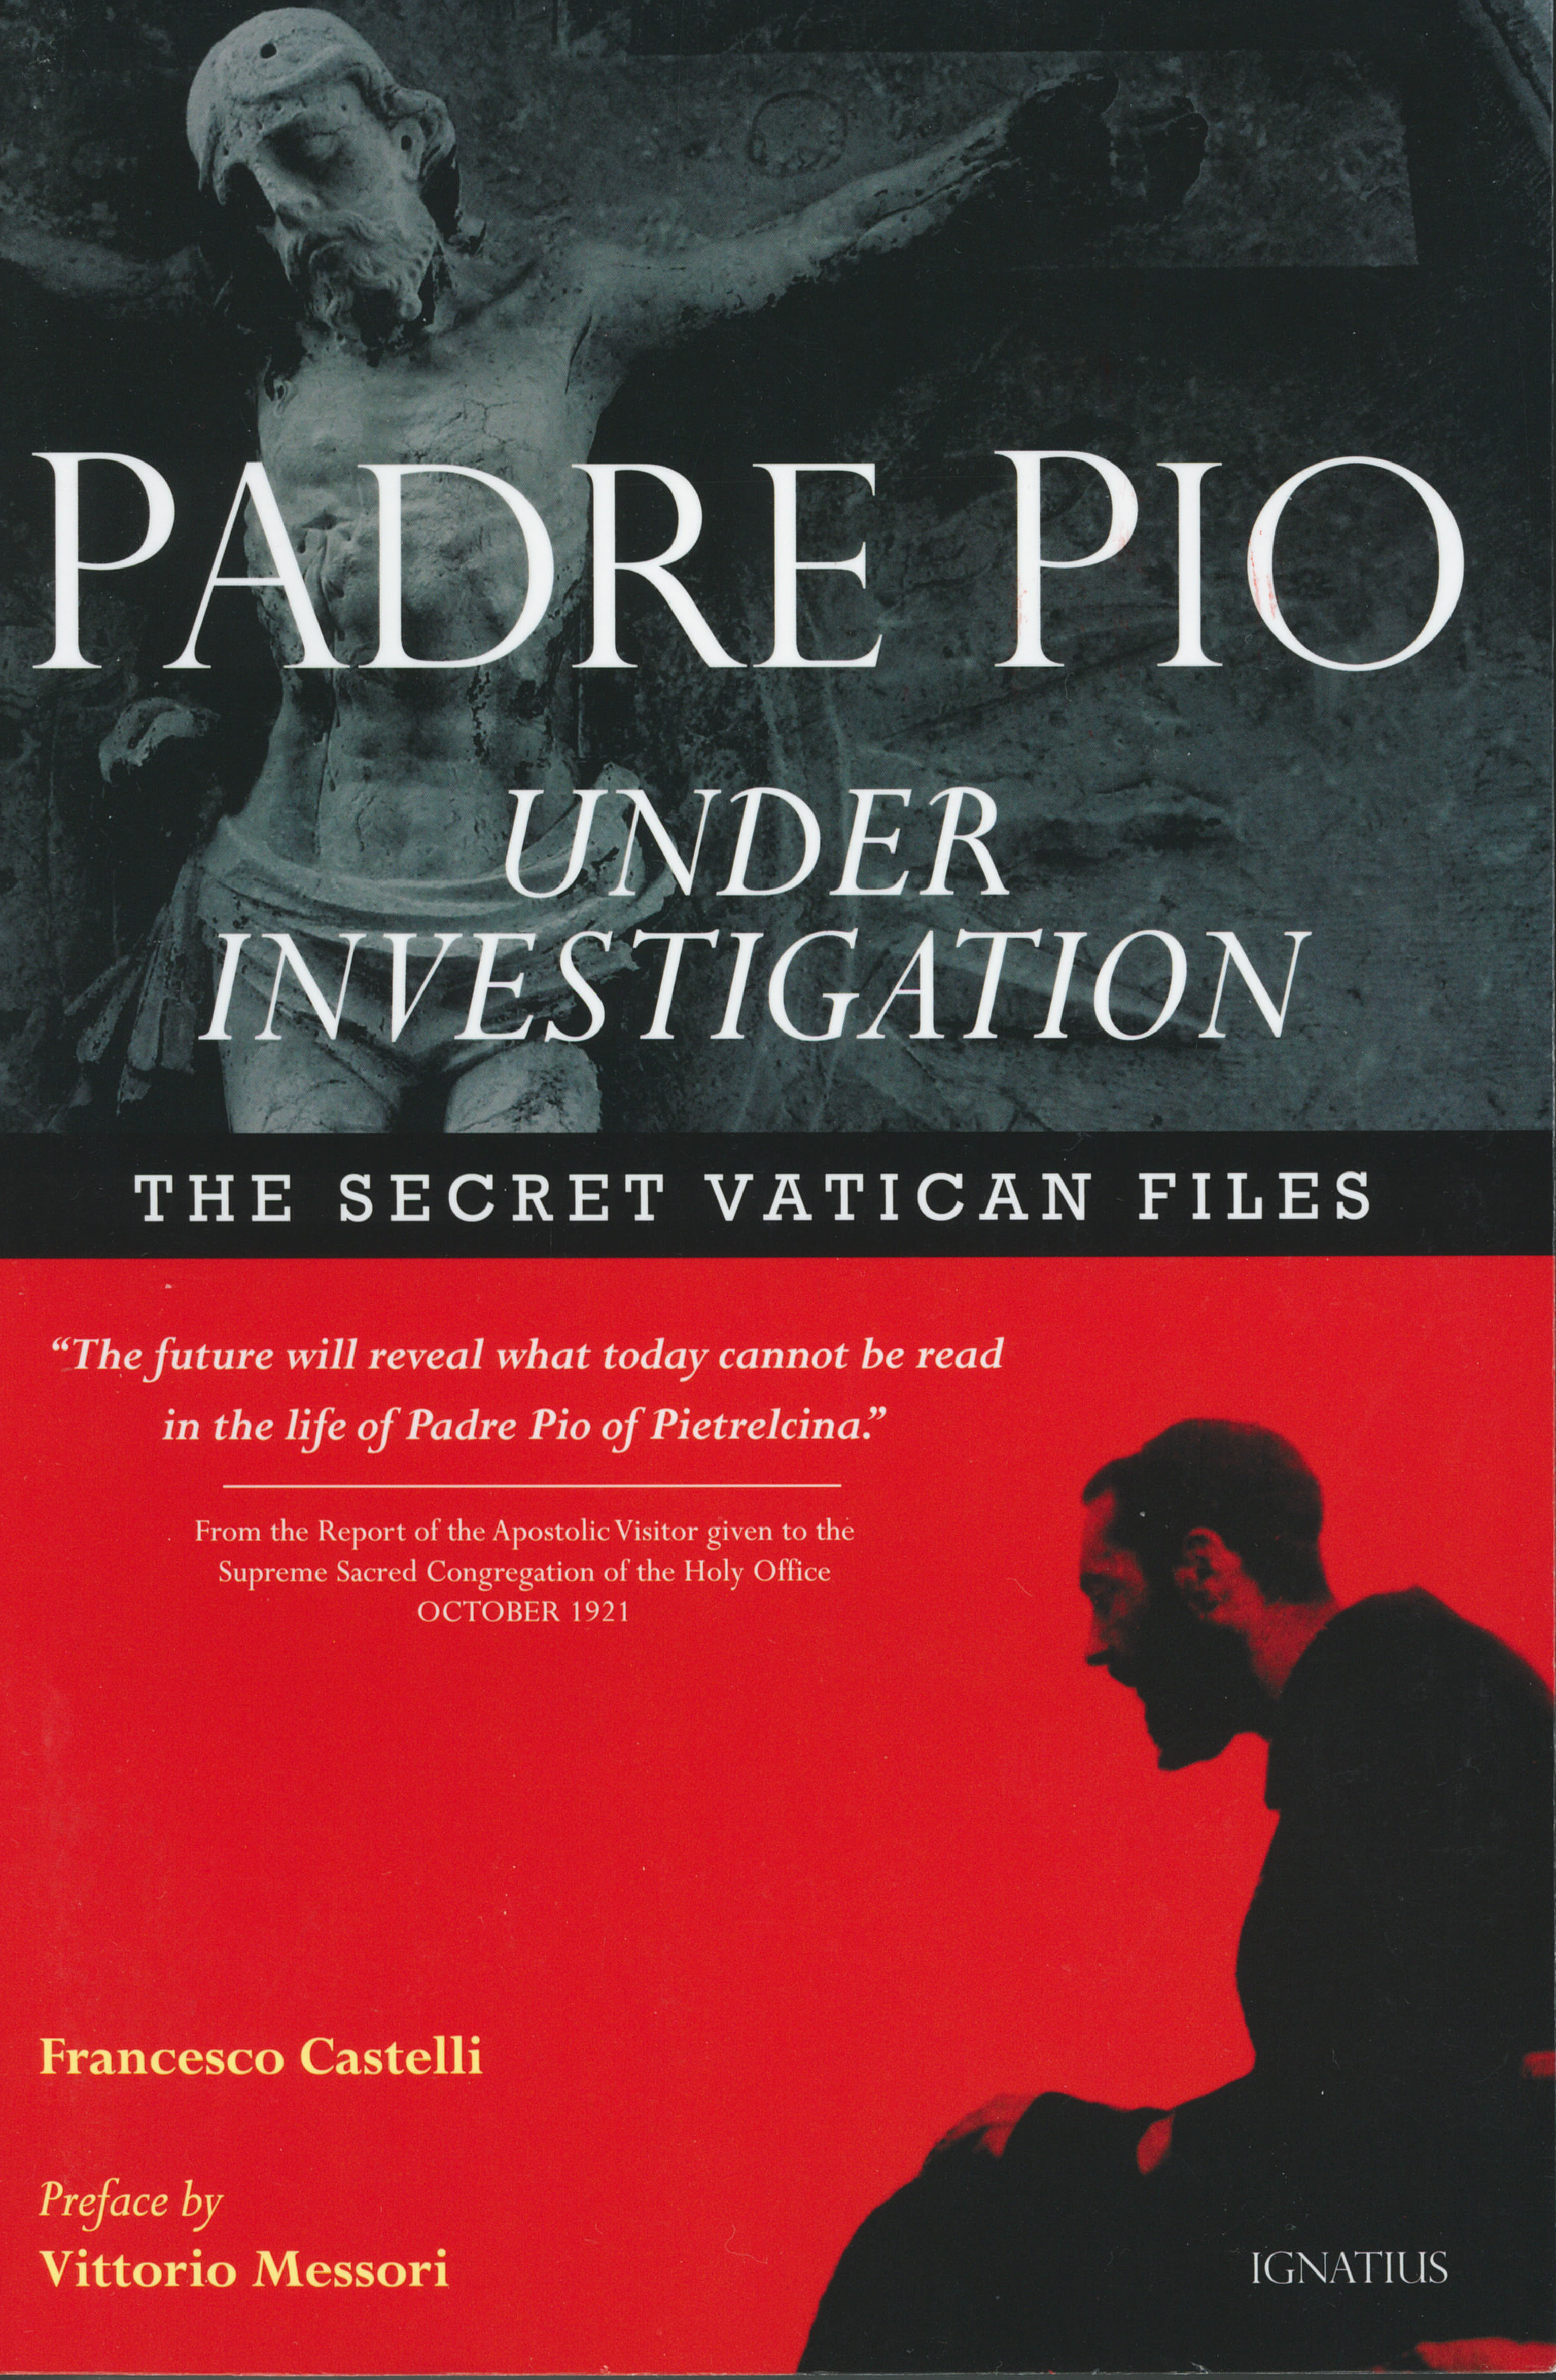 Padre Pio Under Investigation by Francesco Castelli 108-9781586174057